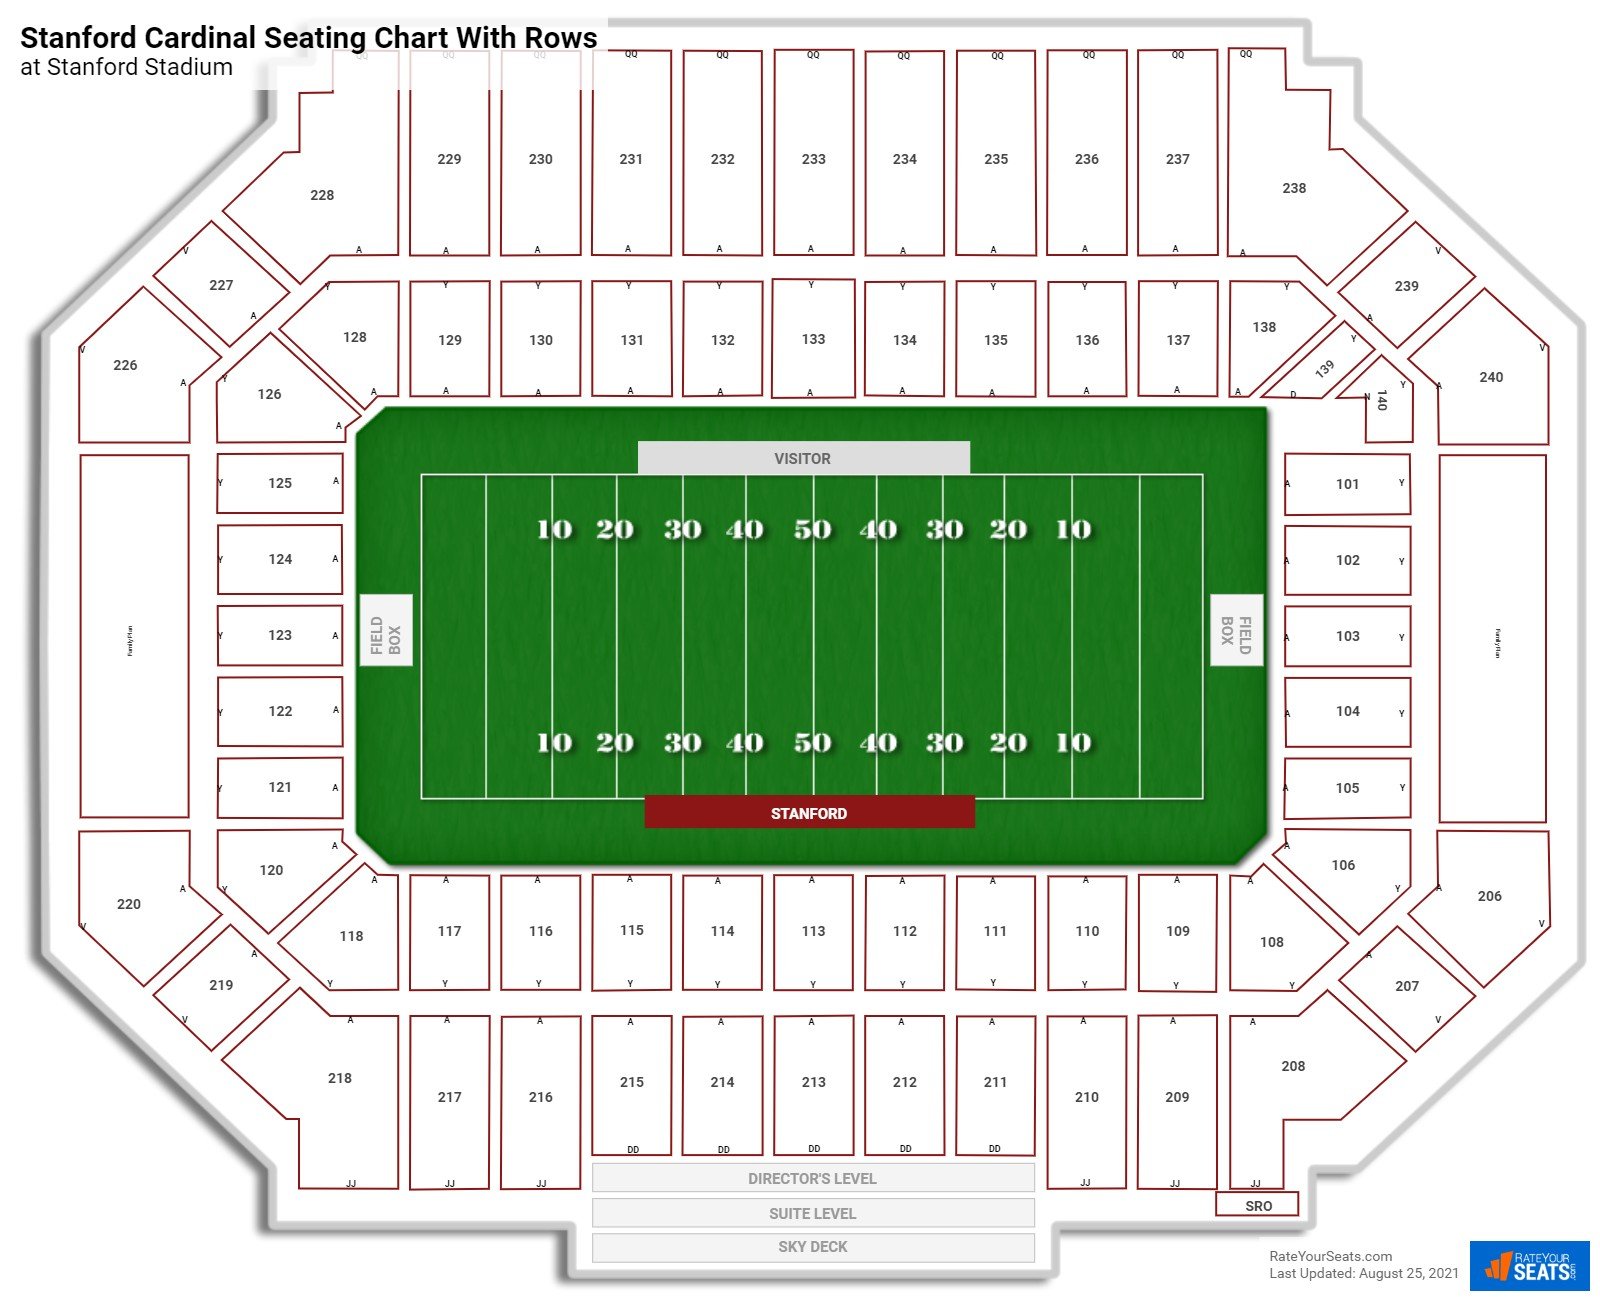 Stanford Stadium Seating Chart - RateYourSeats.com